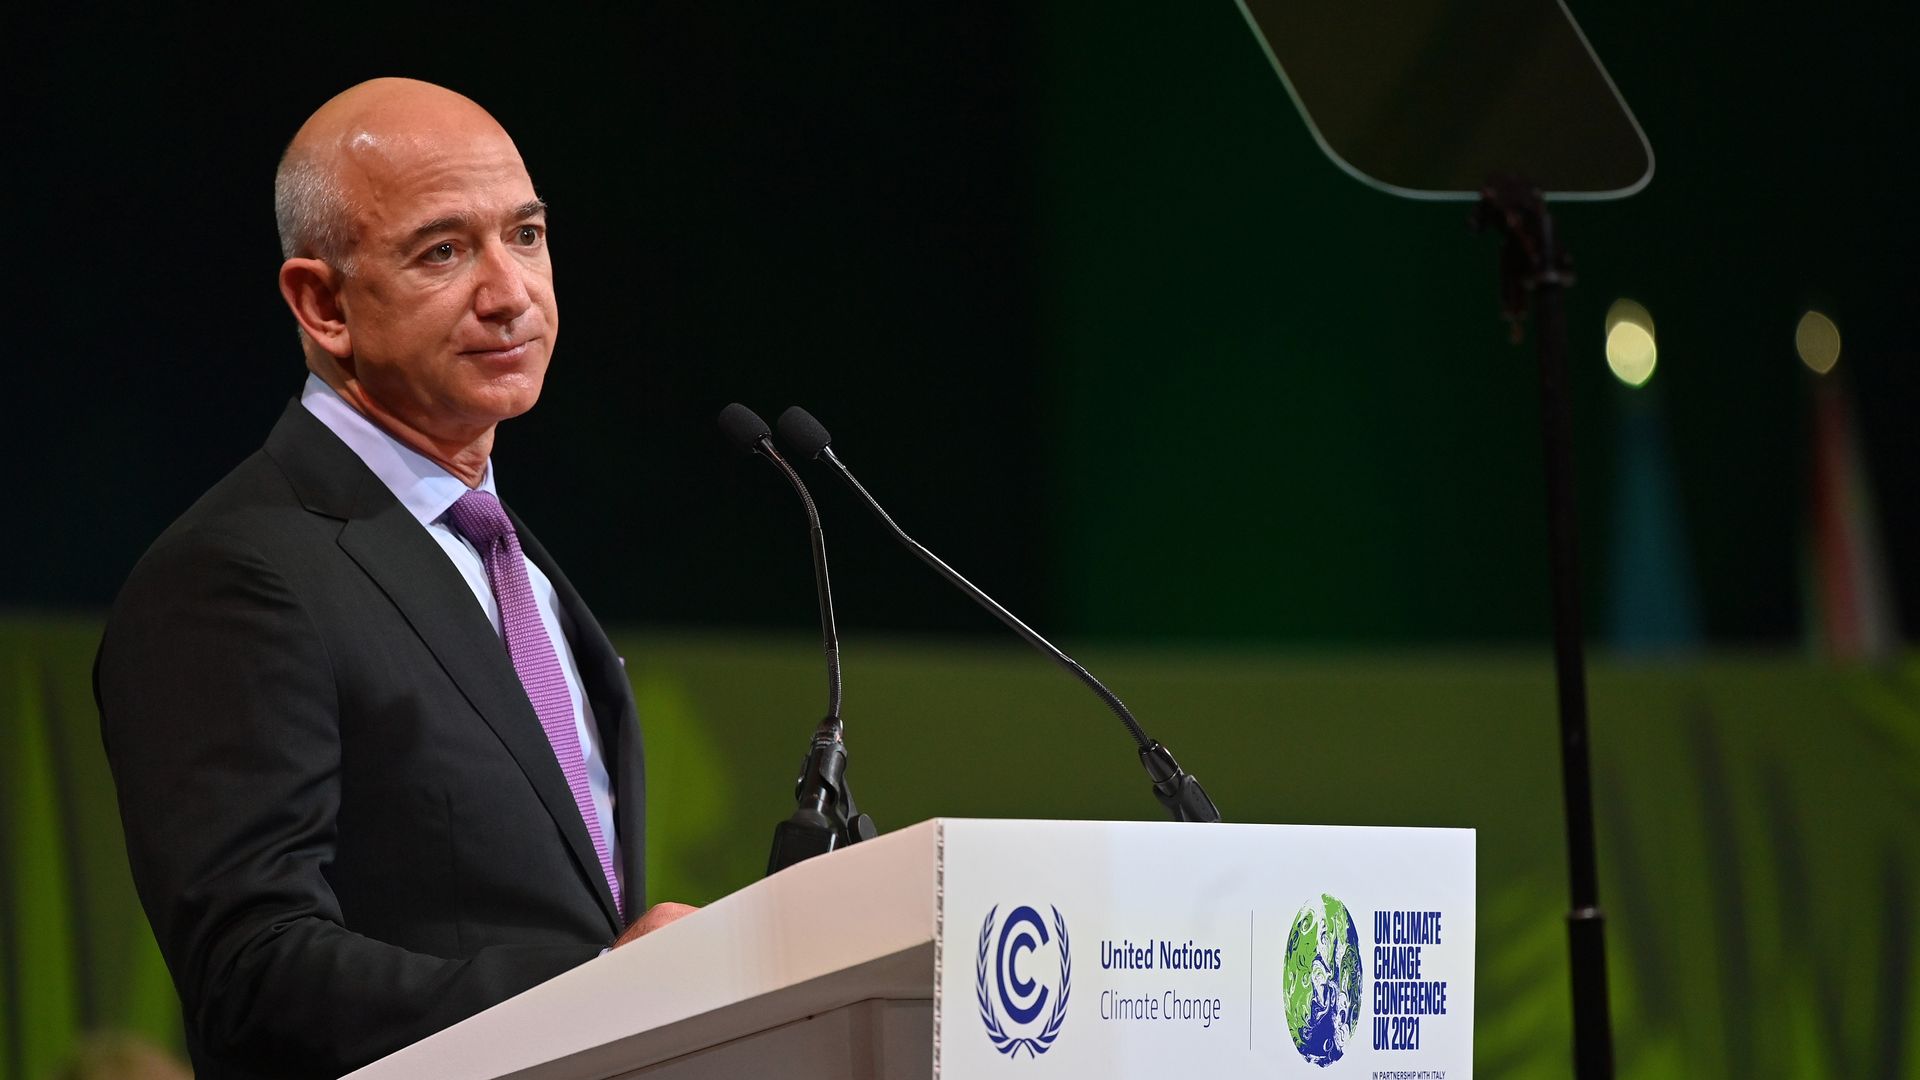 Jeff Bezos speaking at COP 26 